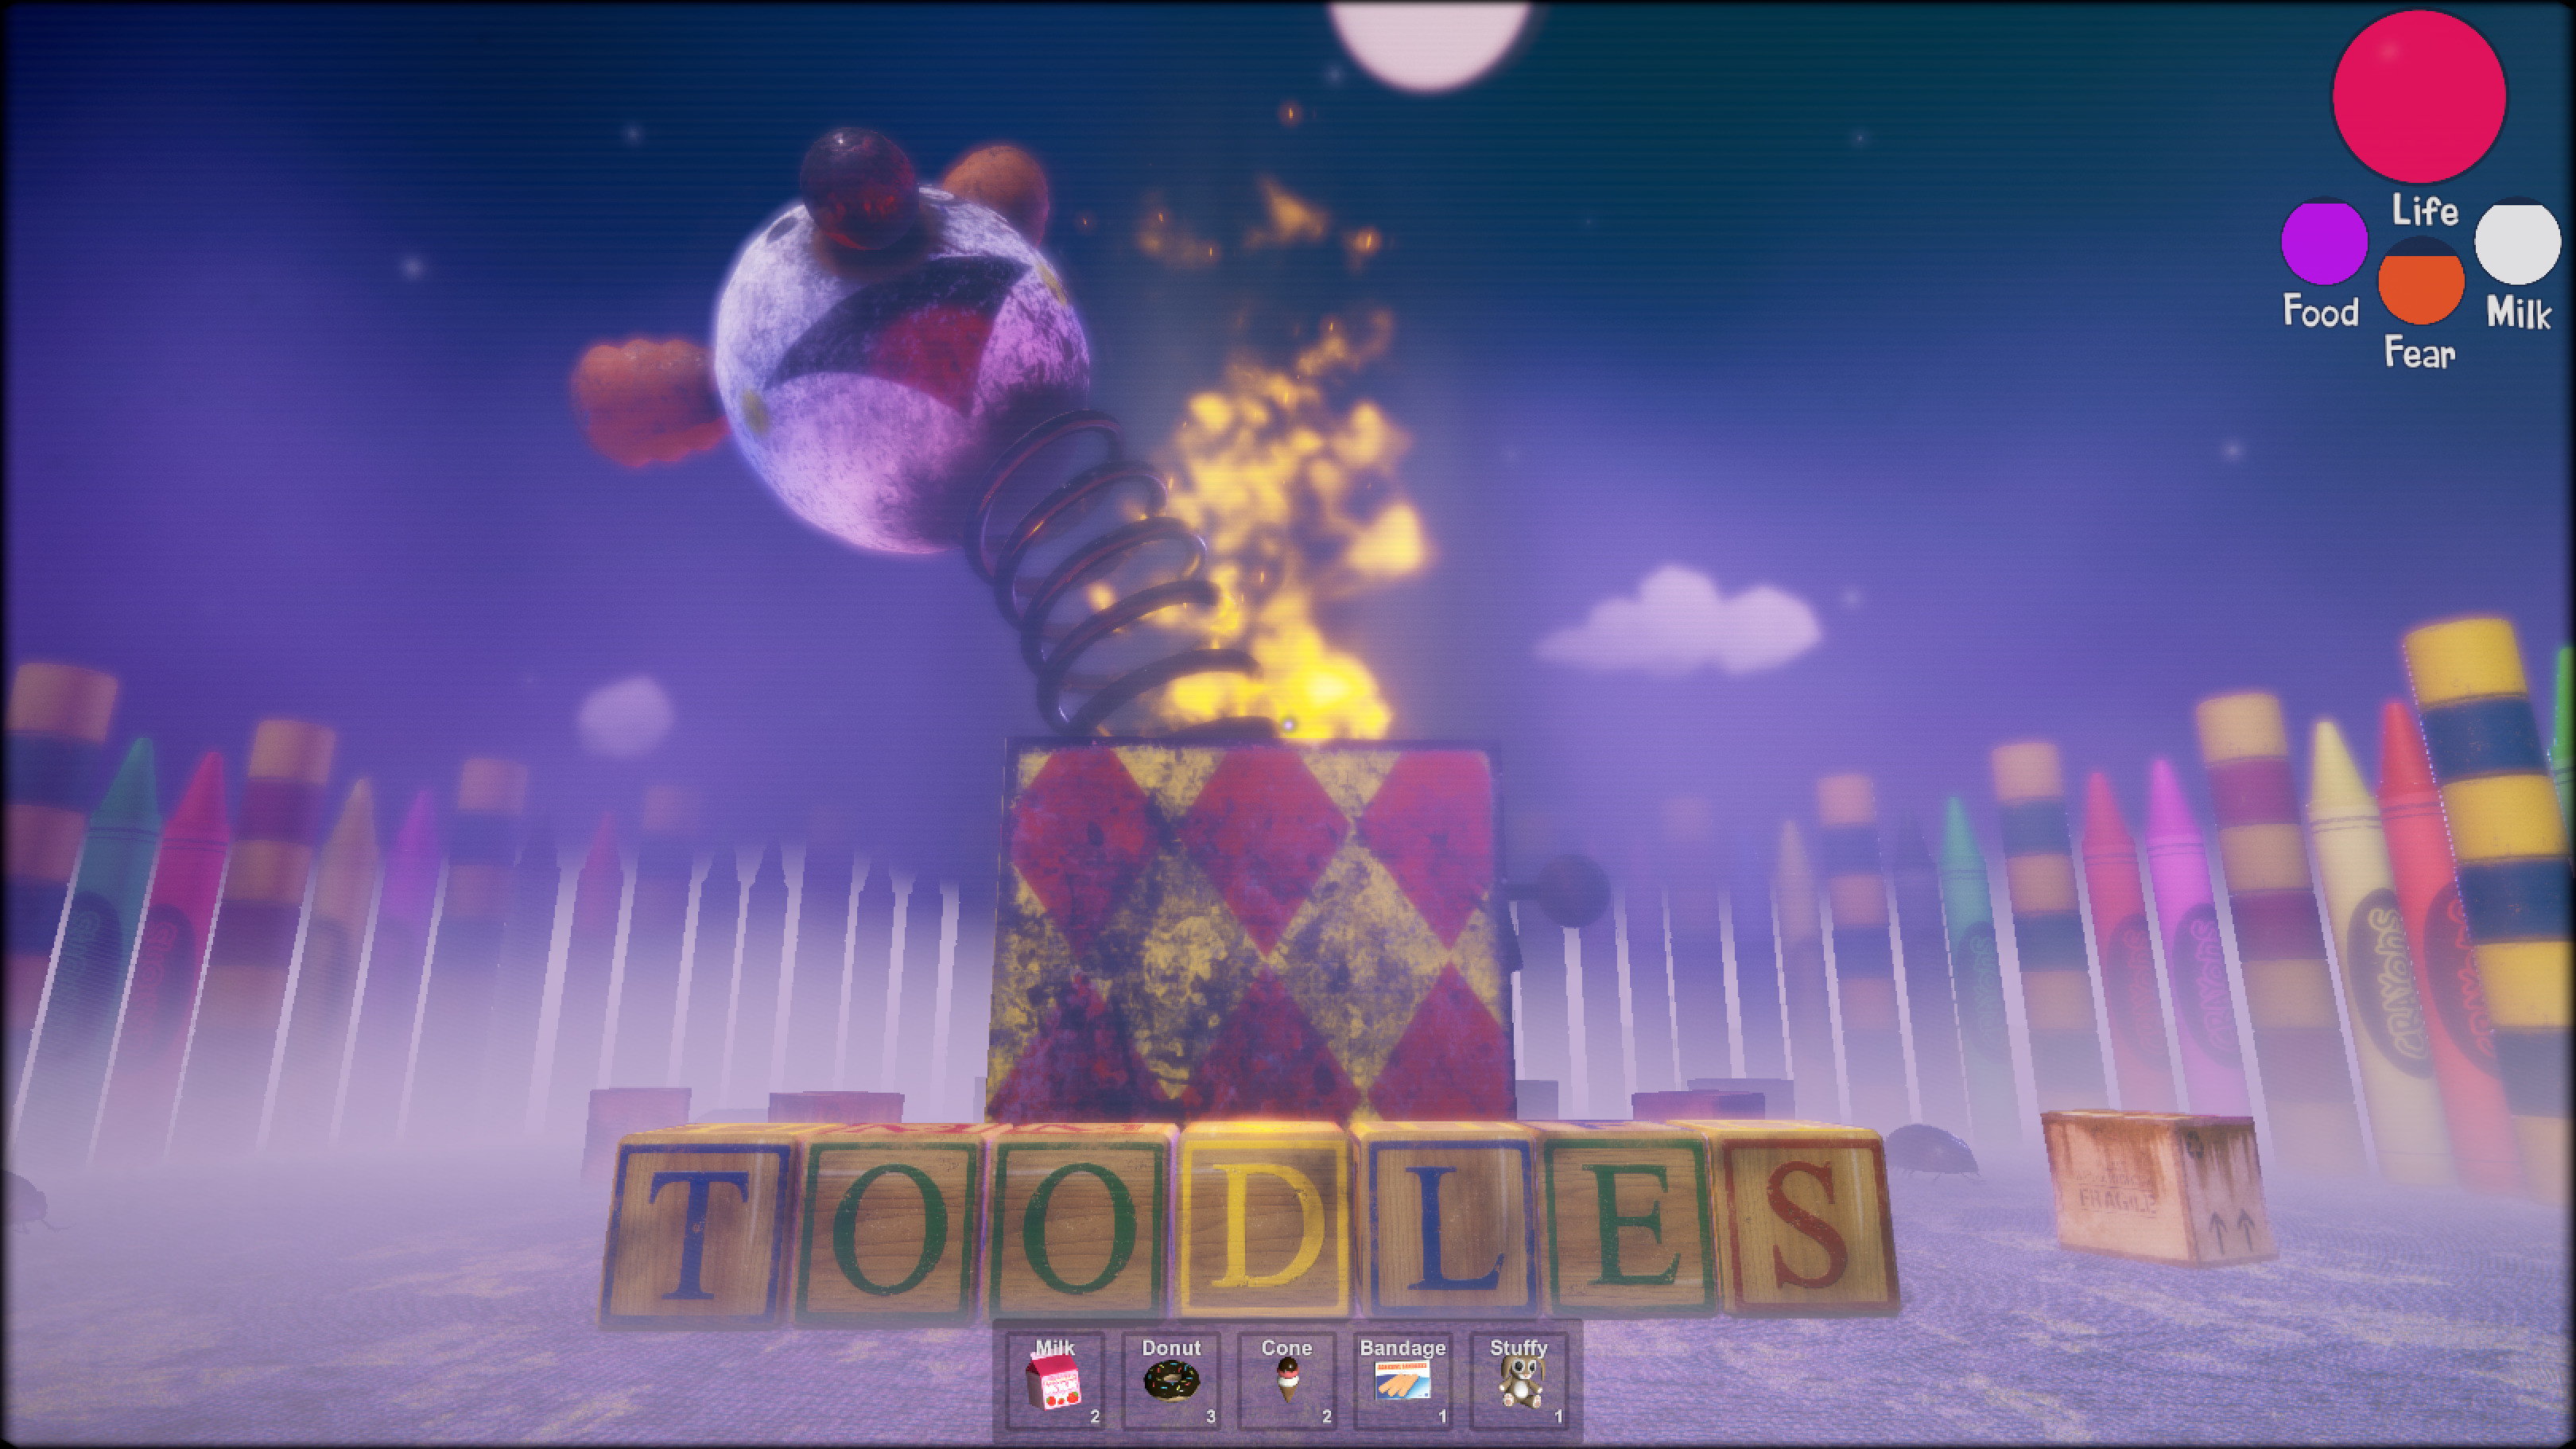 Toodles & Toddlers screenshot